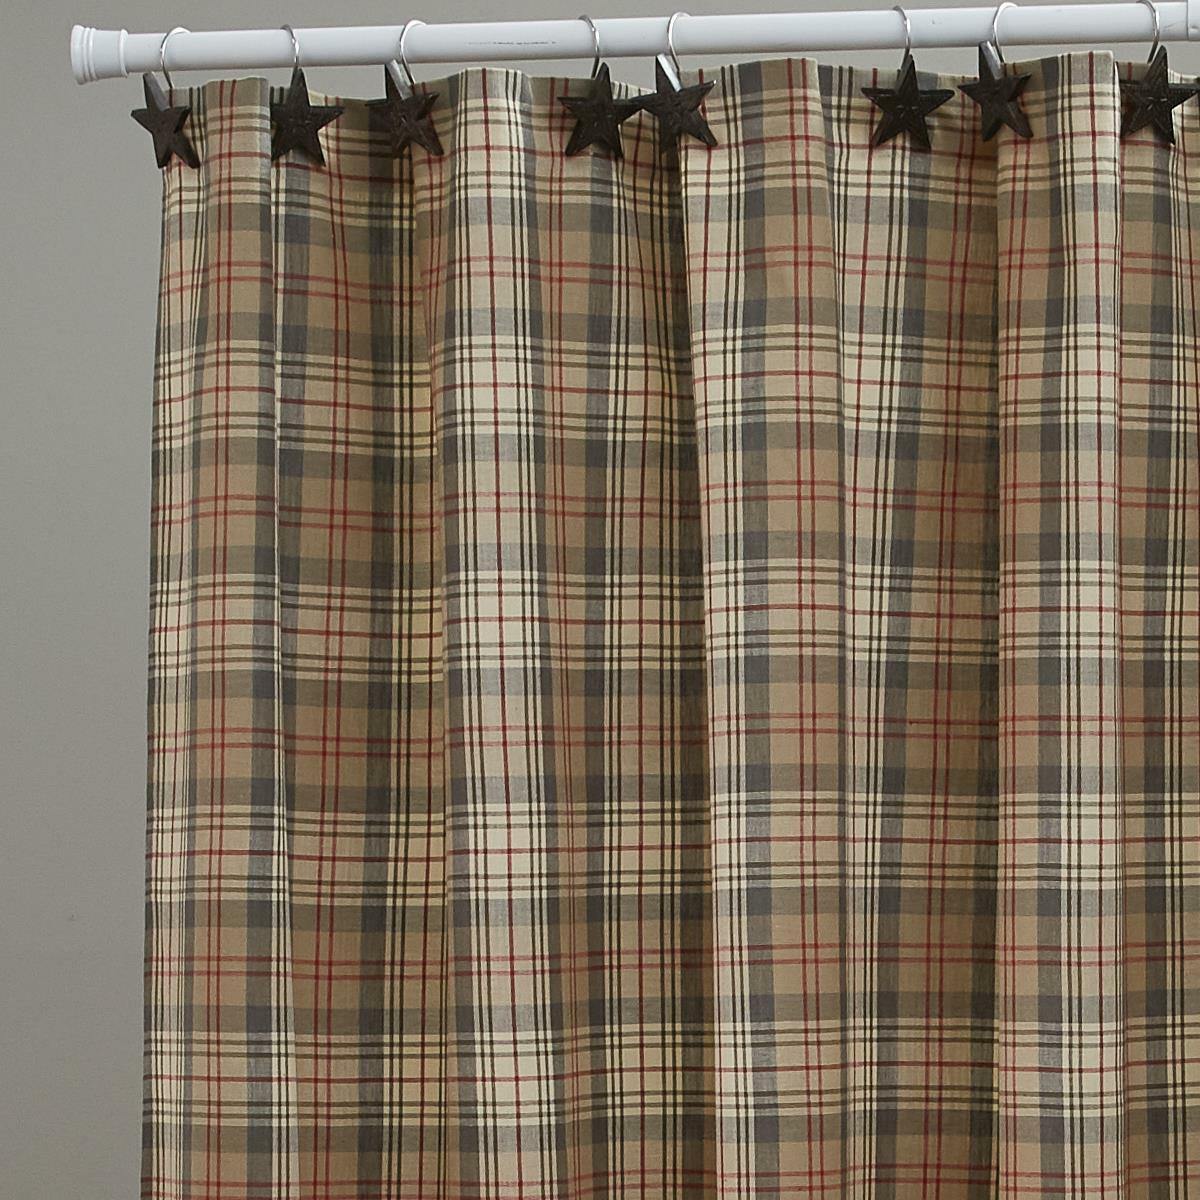 Gentry Shower Curtain - 72" x 72" Park Designs - The Fox Decor